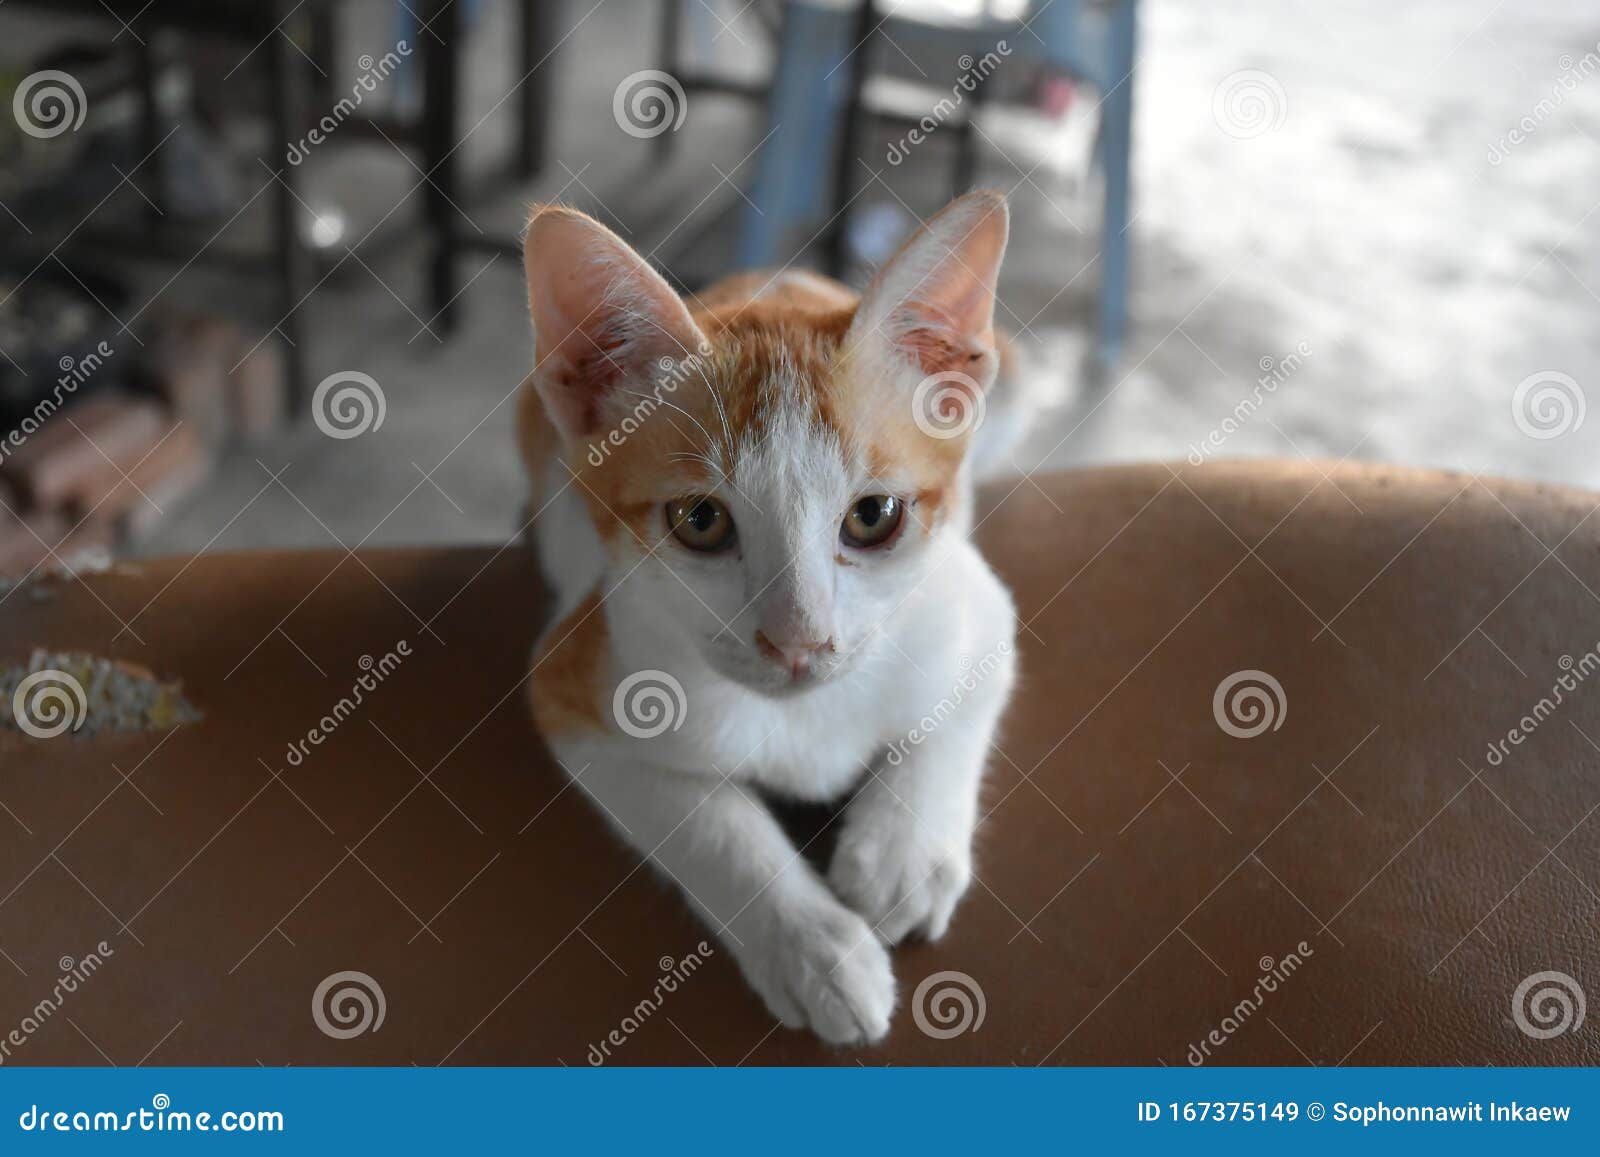 Khao Manee Cat Or White Gem Cat Stock Image Image Of Back White 167375149